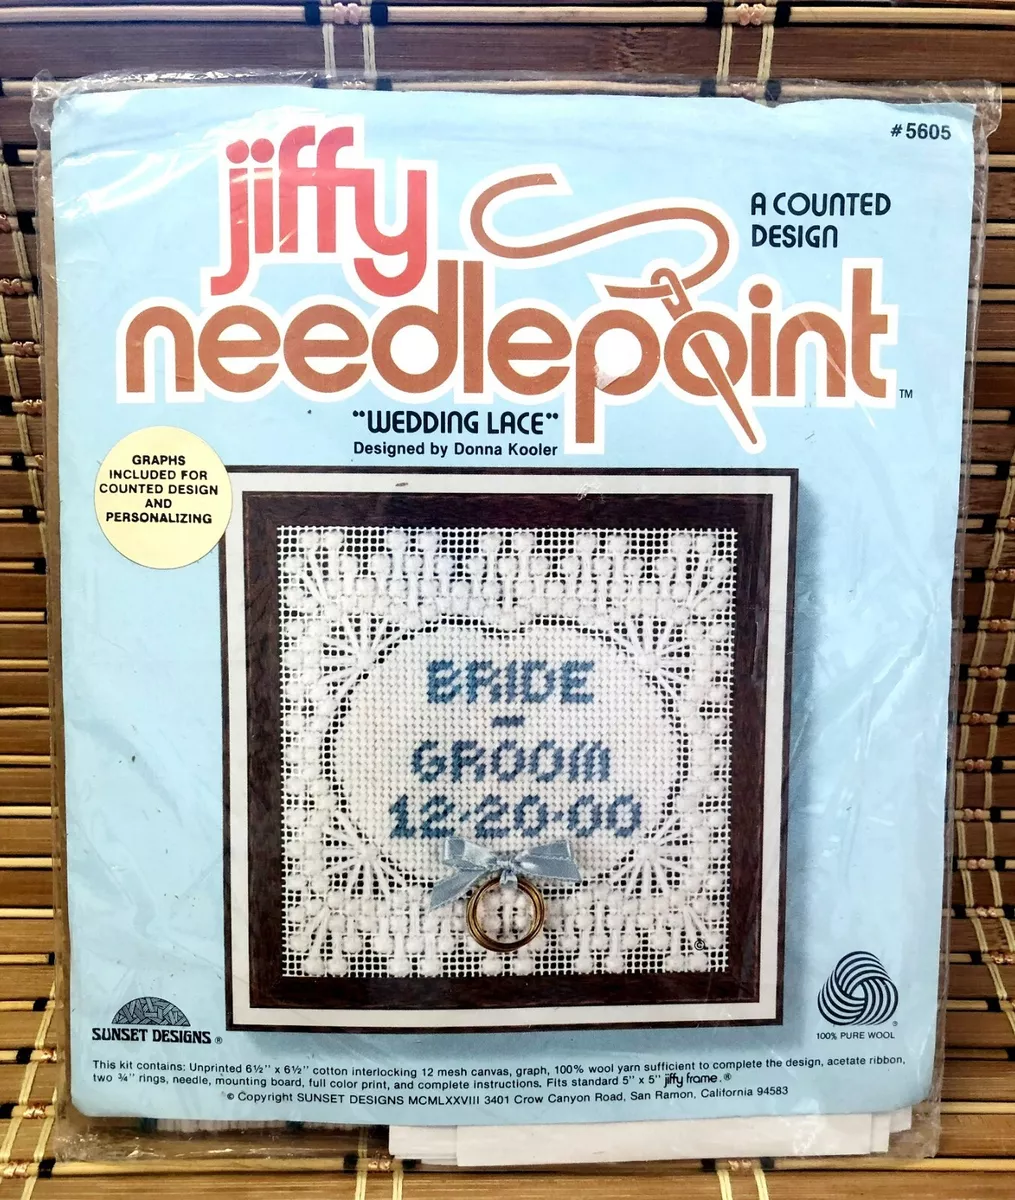 VTG 1978 Jiffy Needlepoint Wedding Lace Kit Donna Kooler 5605 Personalize